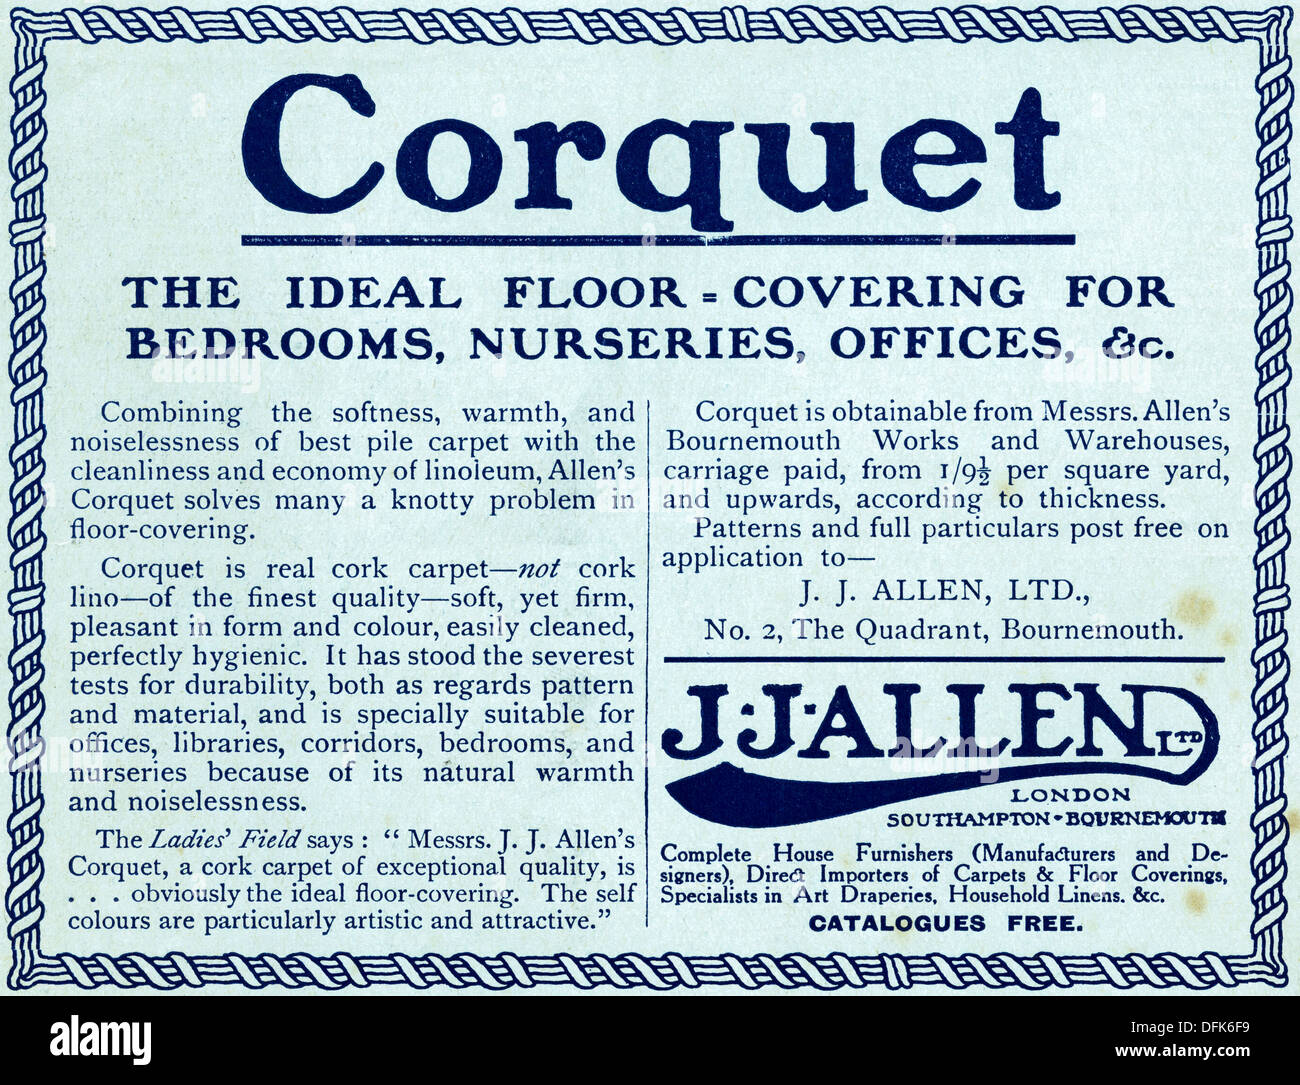 Original 1900s Advertisement Advertising Corquet Floor Covering